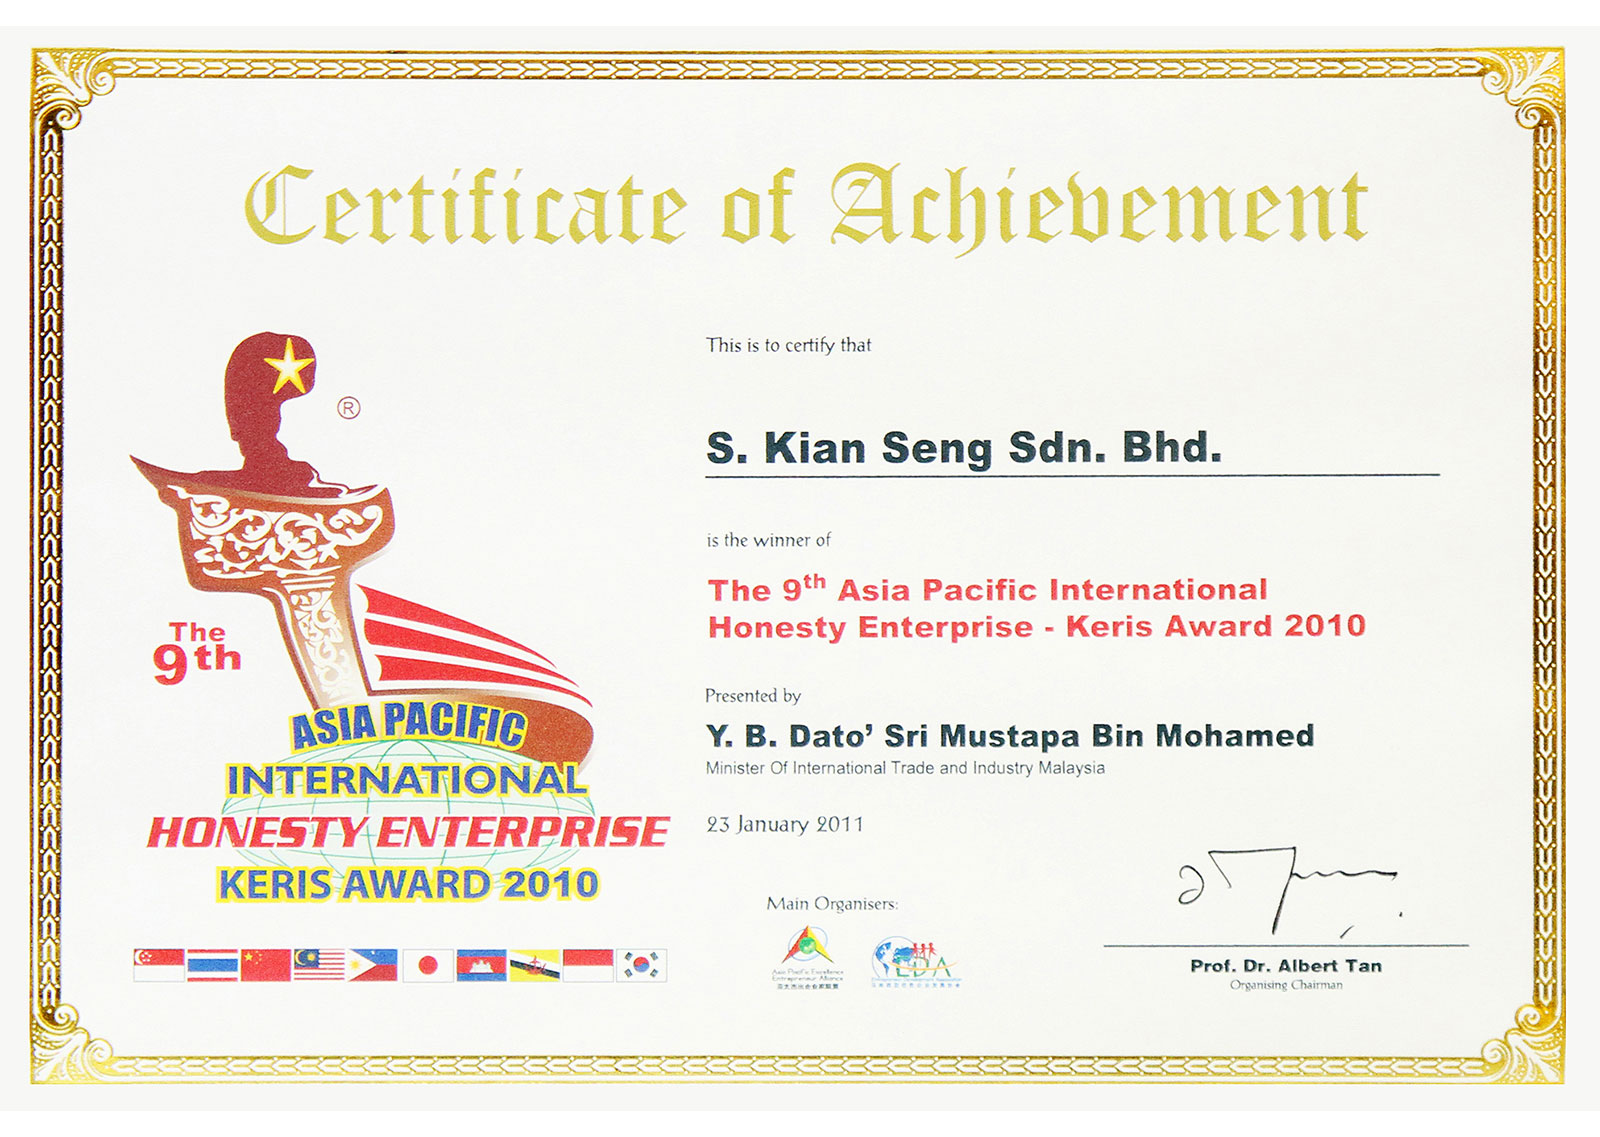 The 9th Asia Pacific International Honesty Enterprise - Keris Award 2010